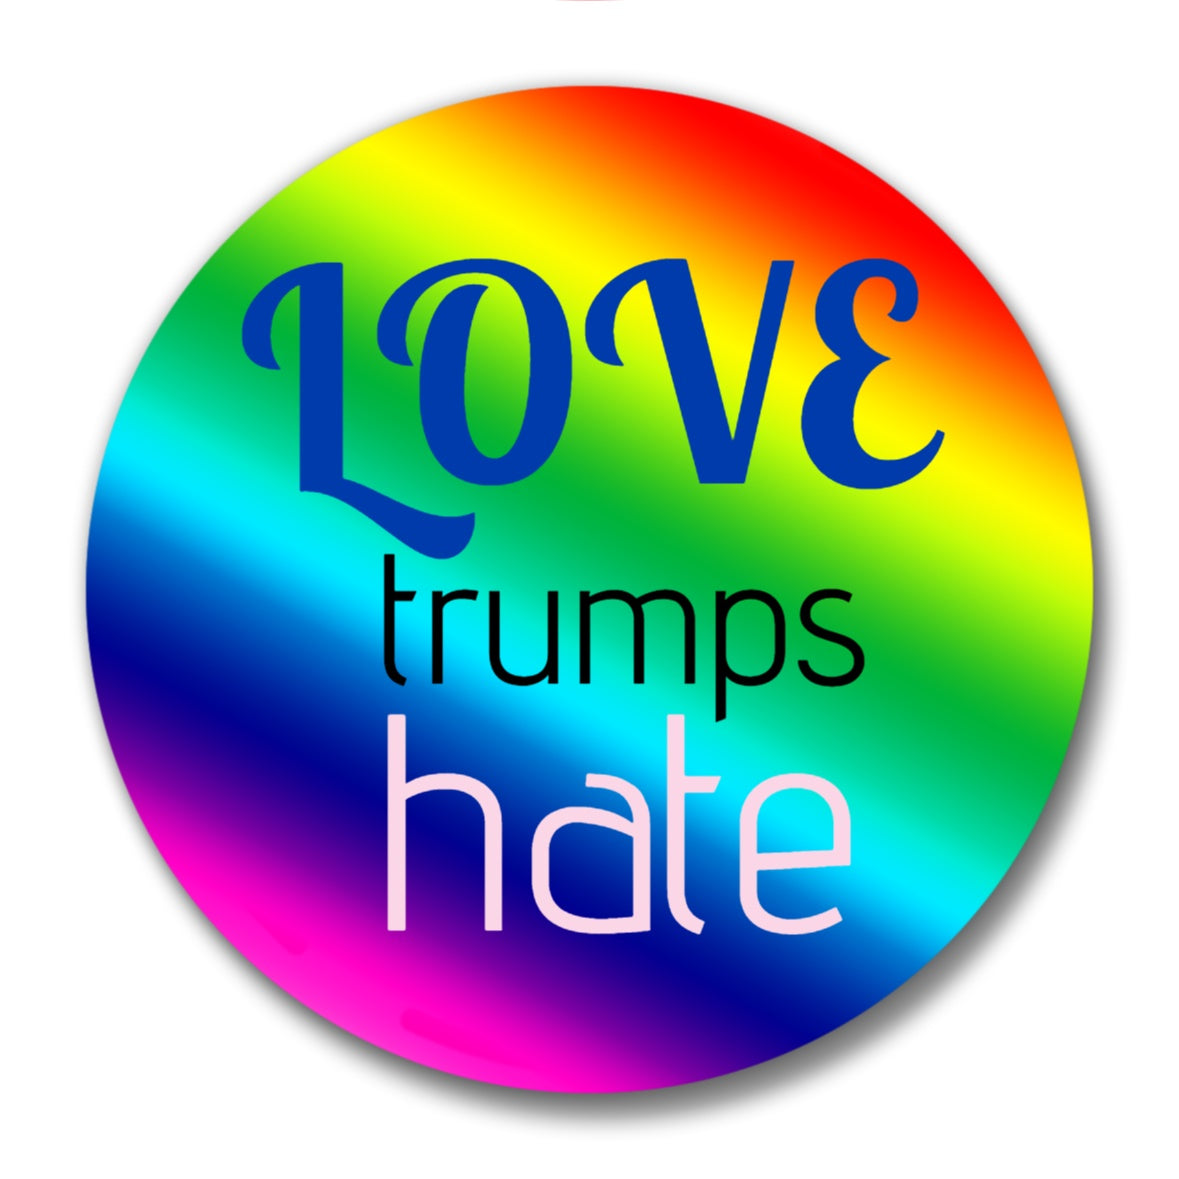 LOVE trumps hate